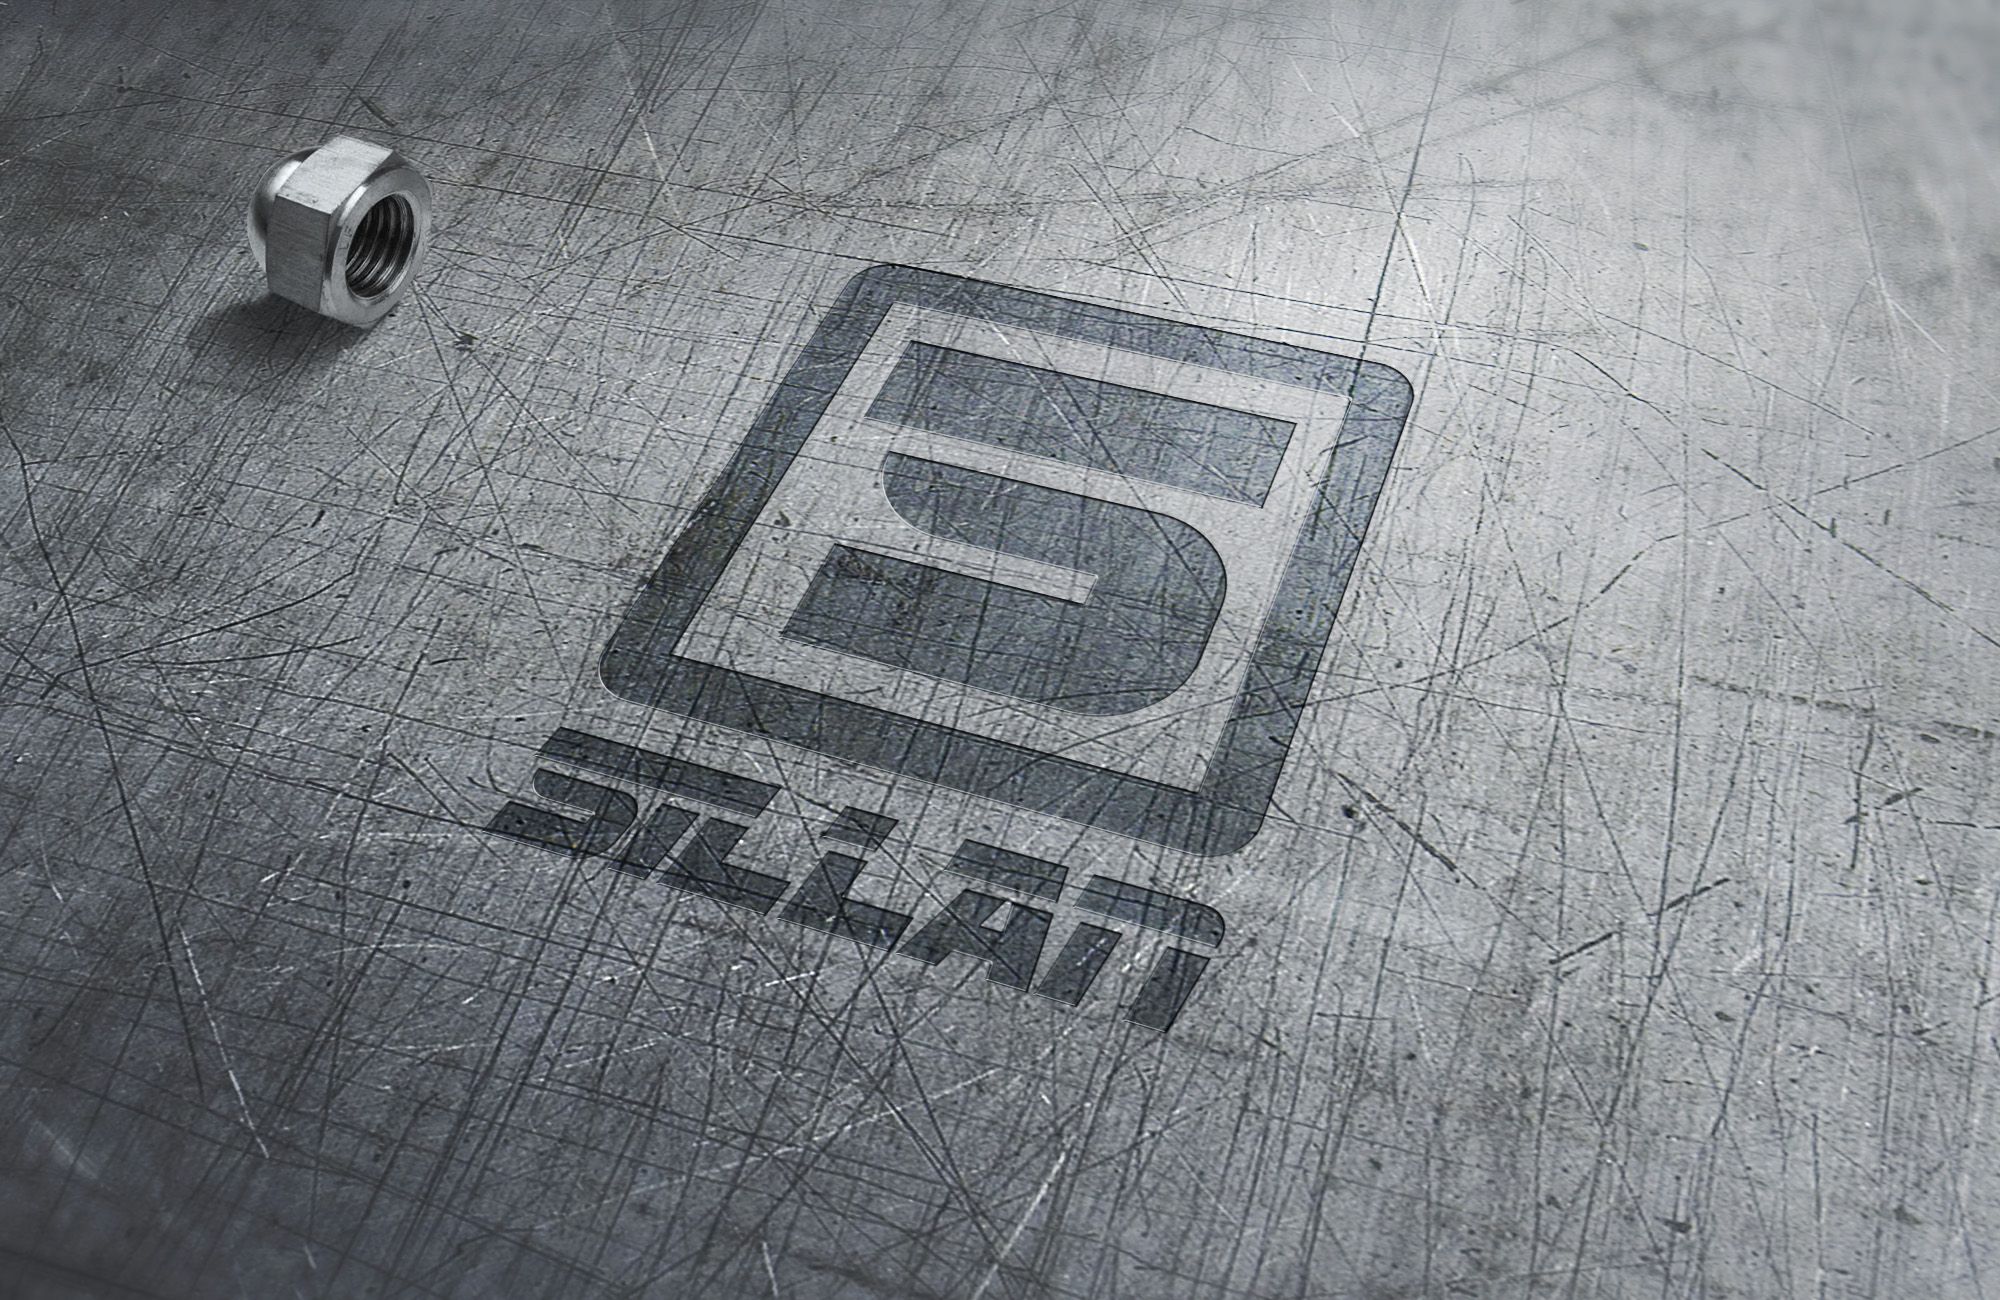 Логотип для Sillan - дизайнер maxdes